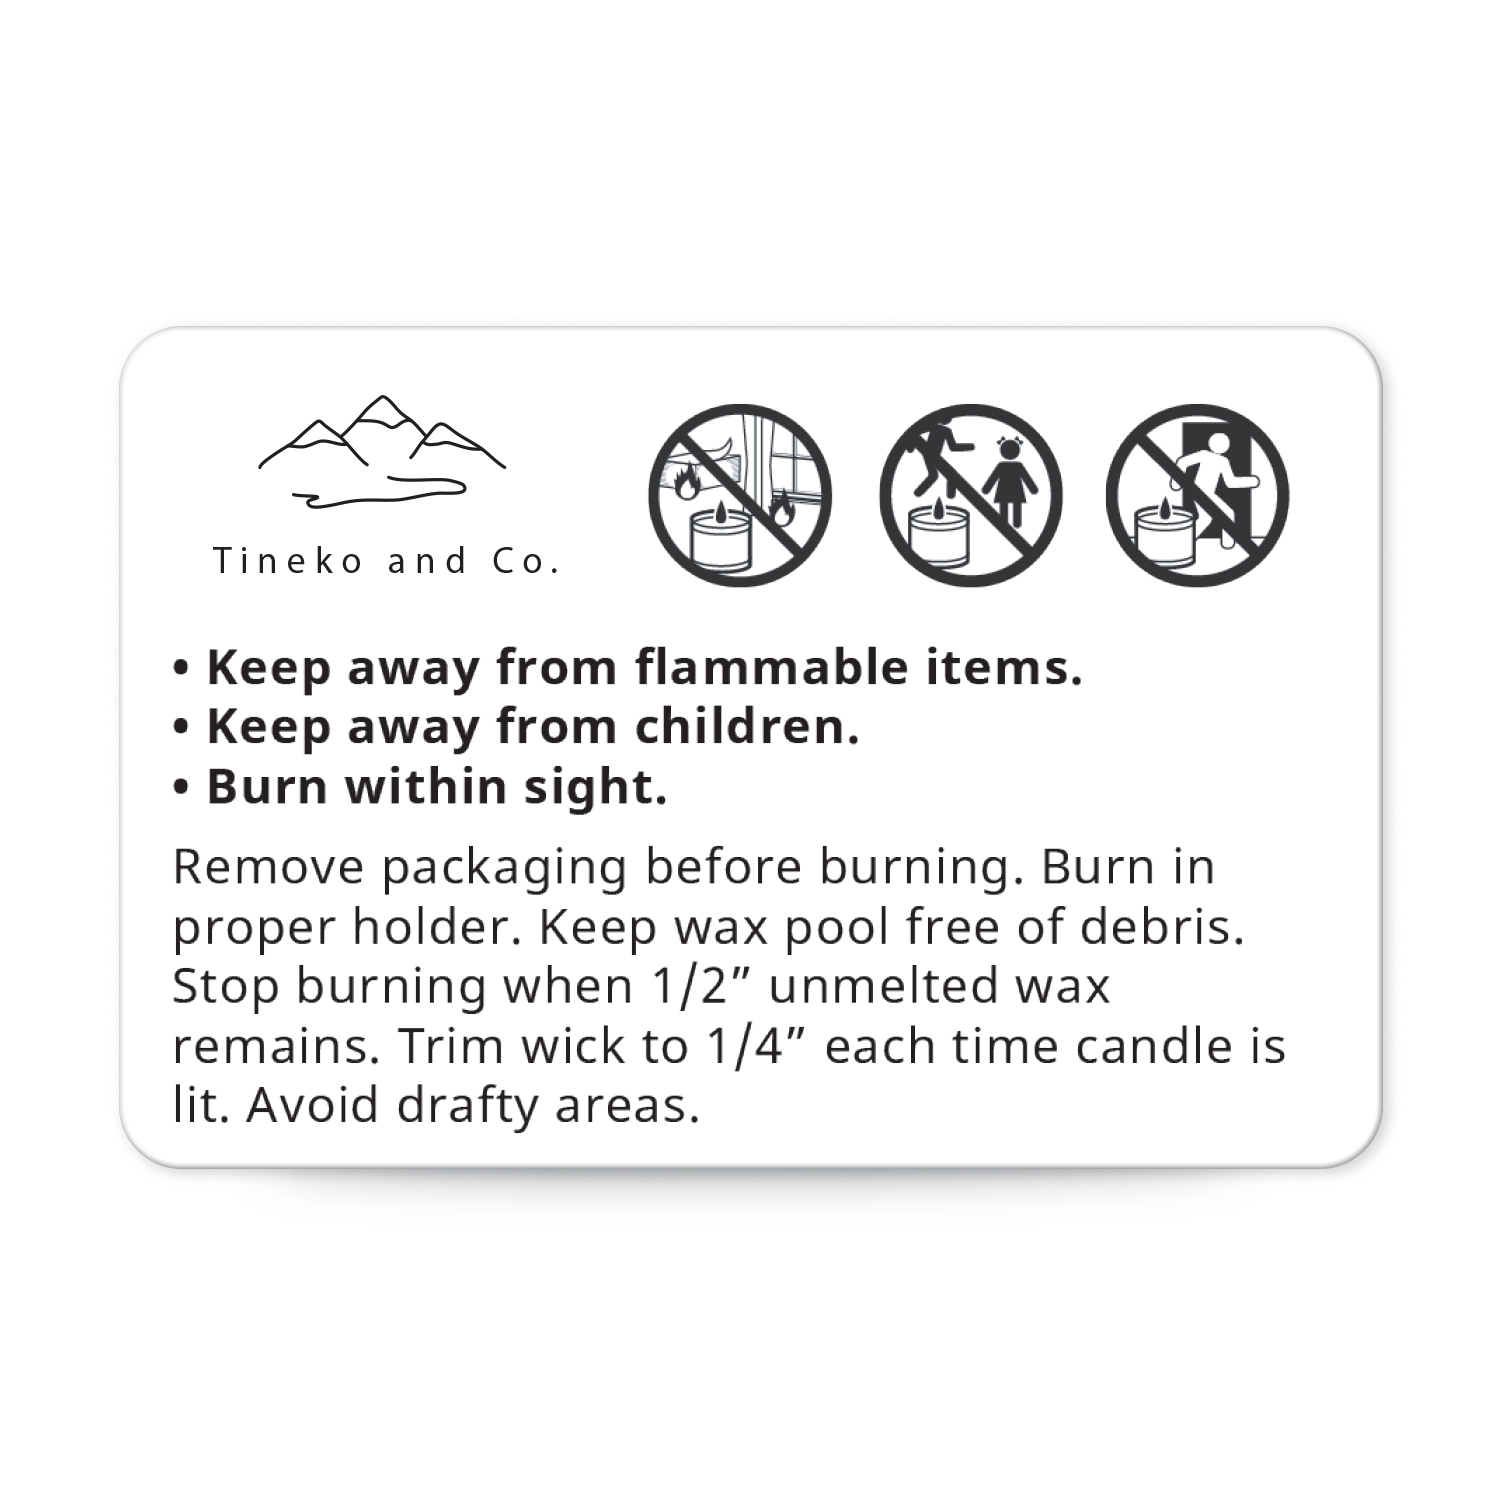 Warning Labels, Blank or Custom Printed Labels